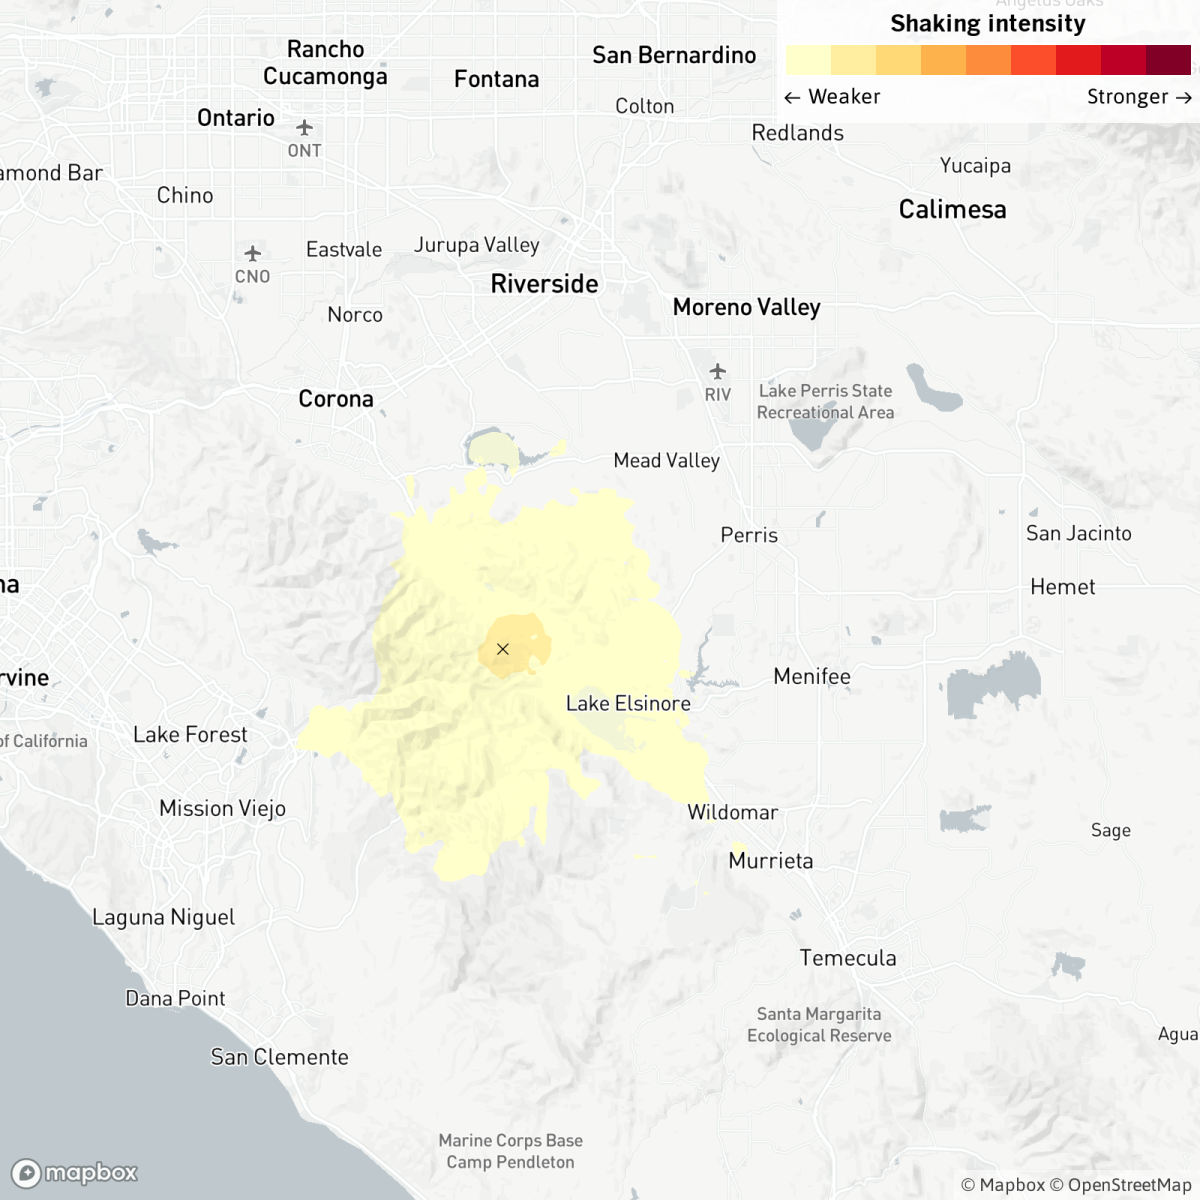 Map of magnitude 3.4 earthquake near Temescal Valley, Calif.